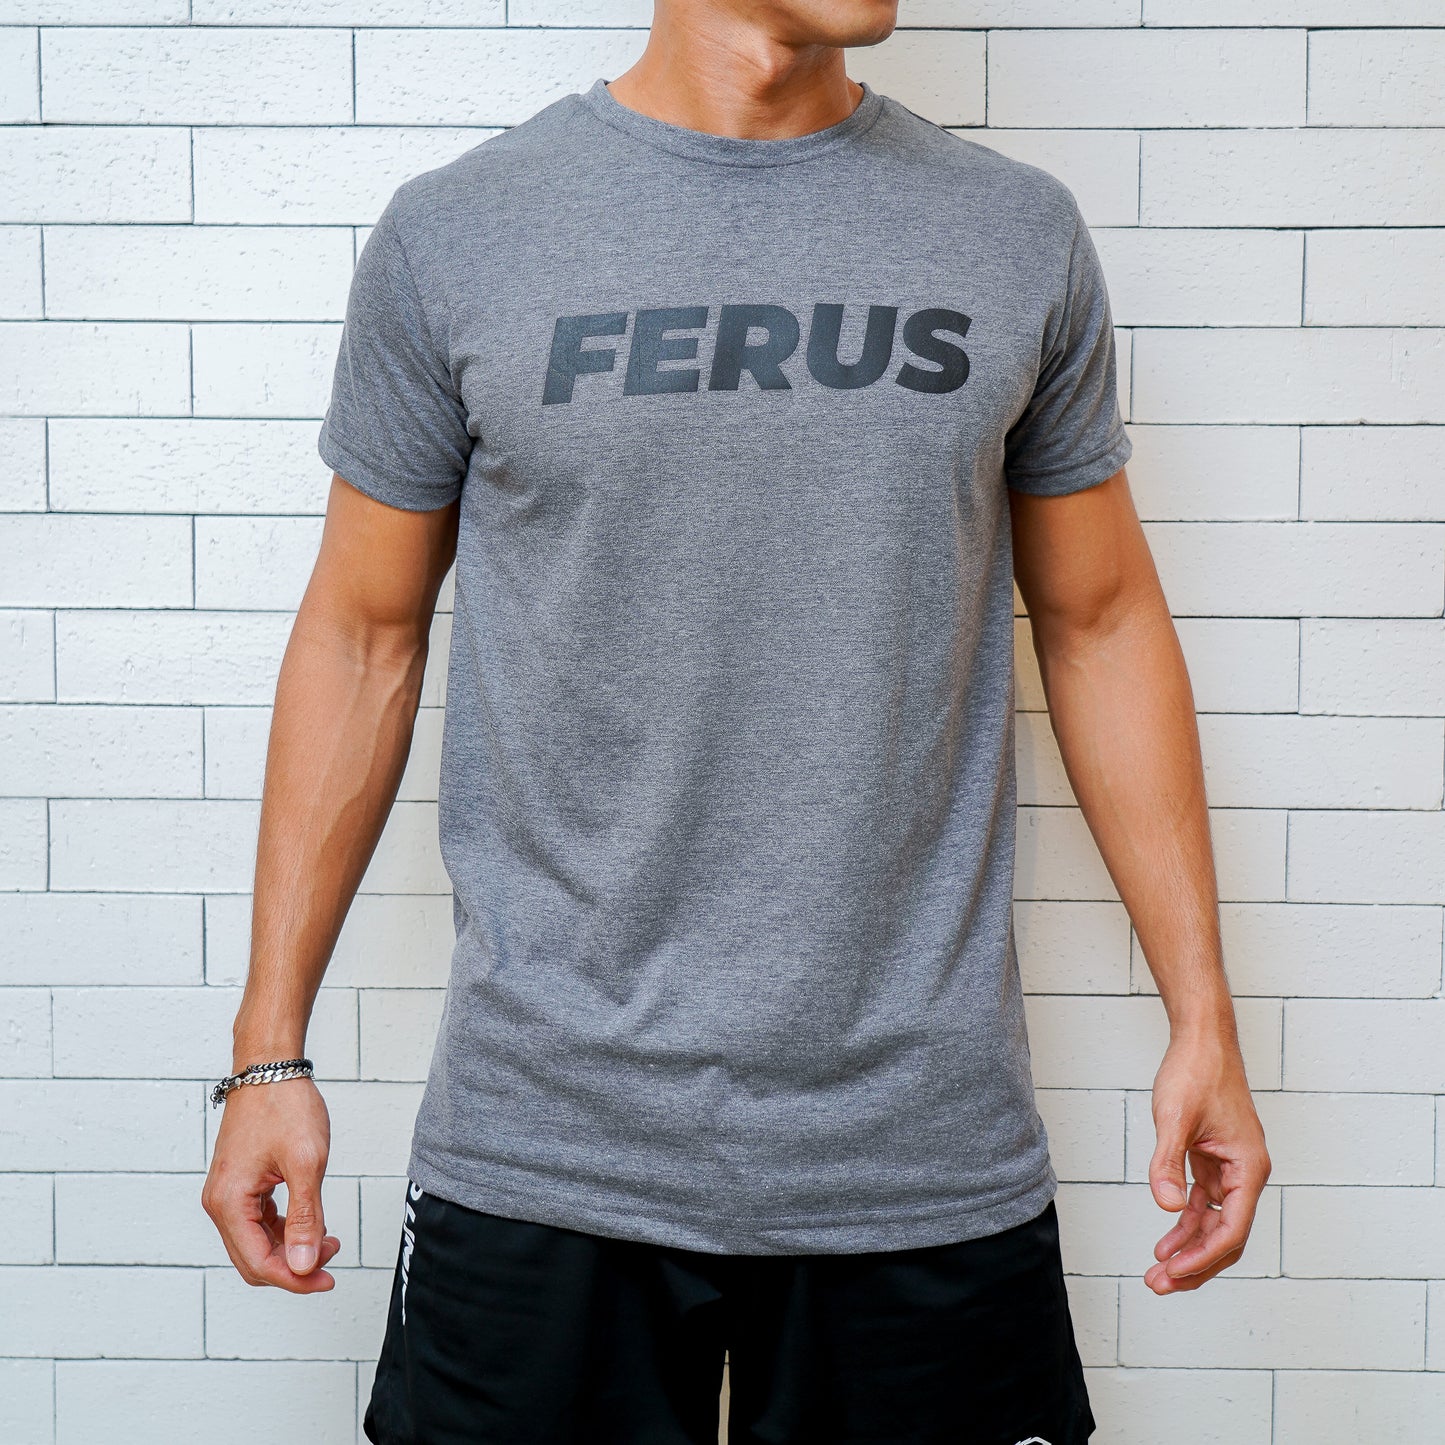 Ferus T-Shirt